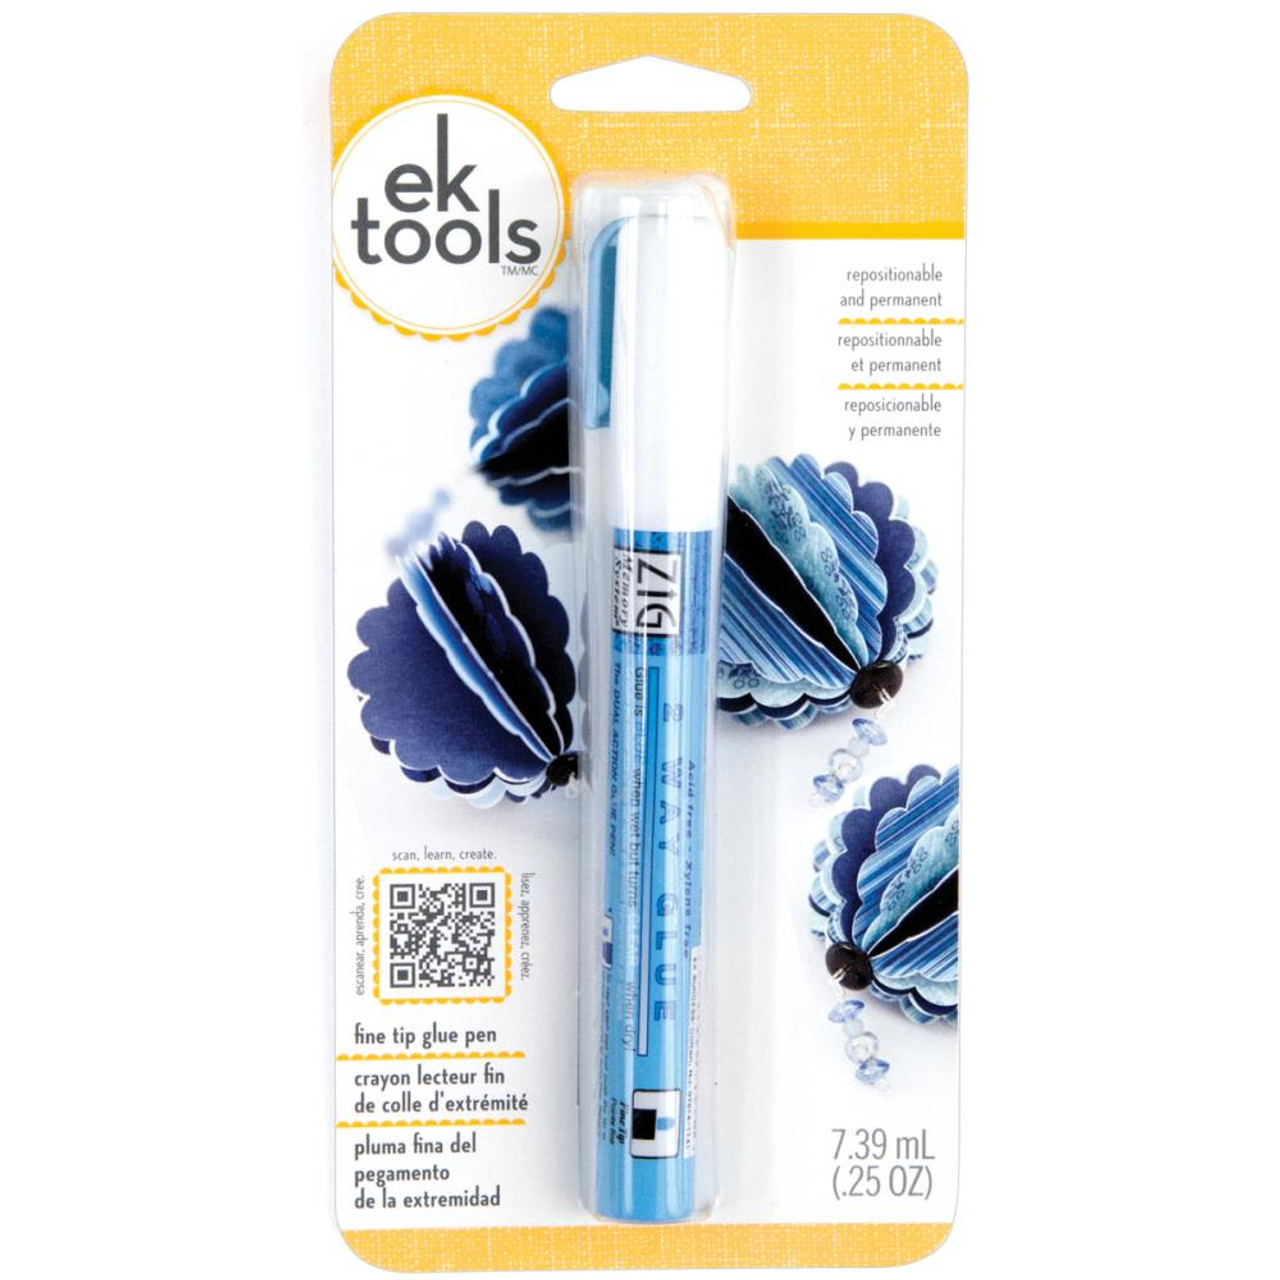 Kuretake ZIG 2 Way Glue Pen - Fine